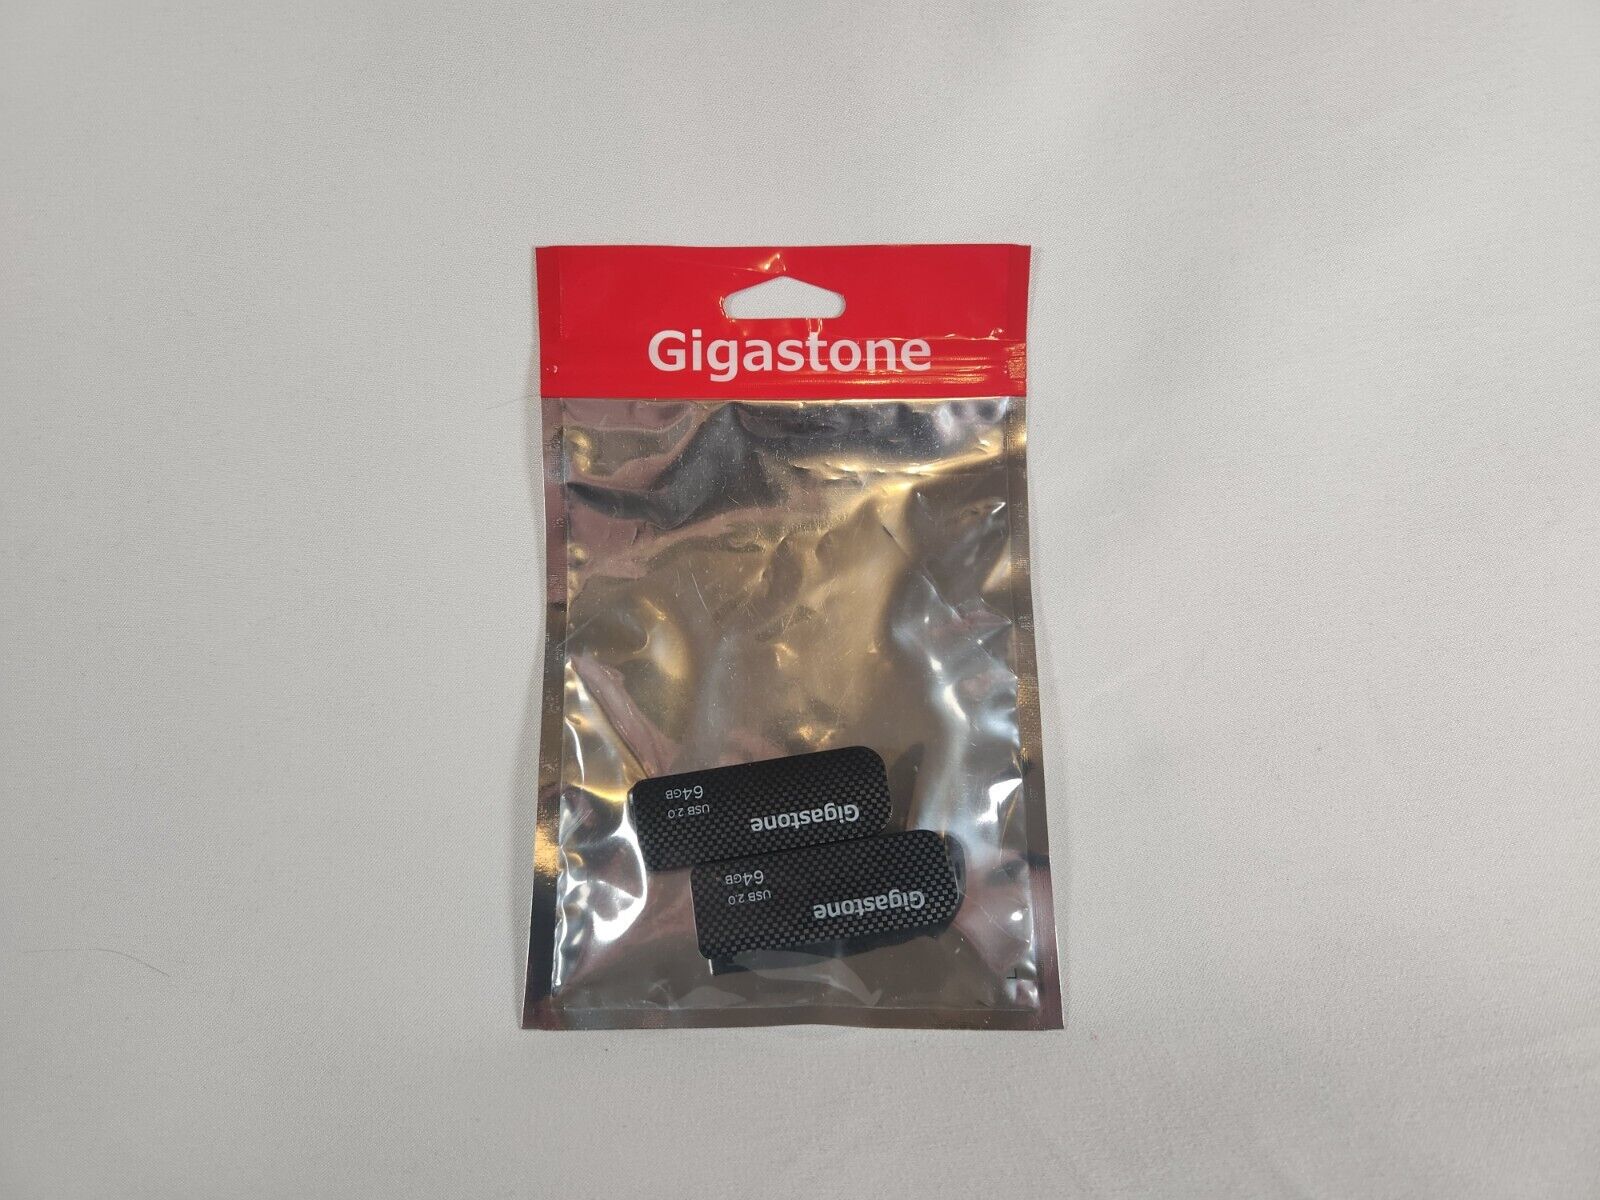 Gigastone V30 64GB USB 2.0 Flash Drive 2-Pack, Capless Retractable Design Pen Dr